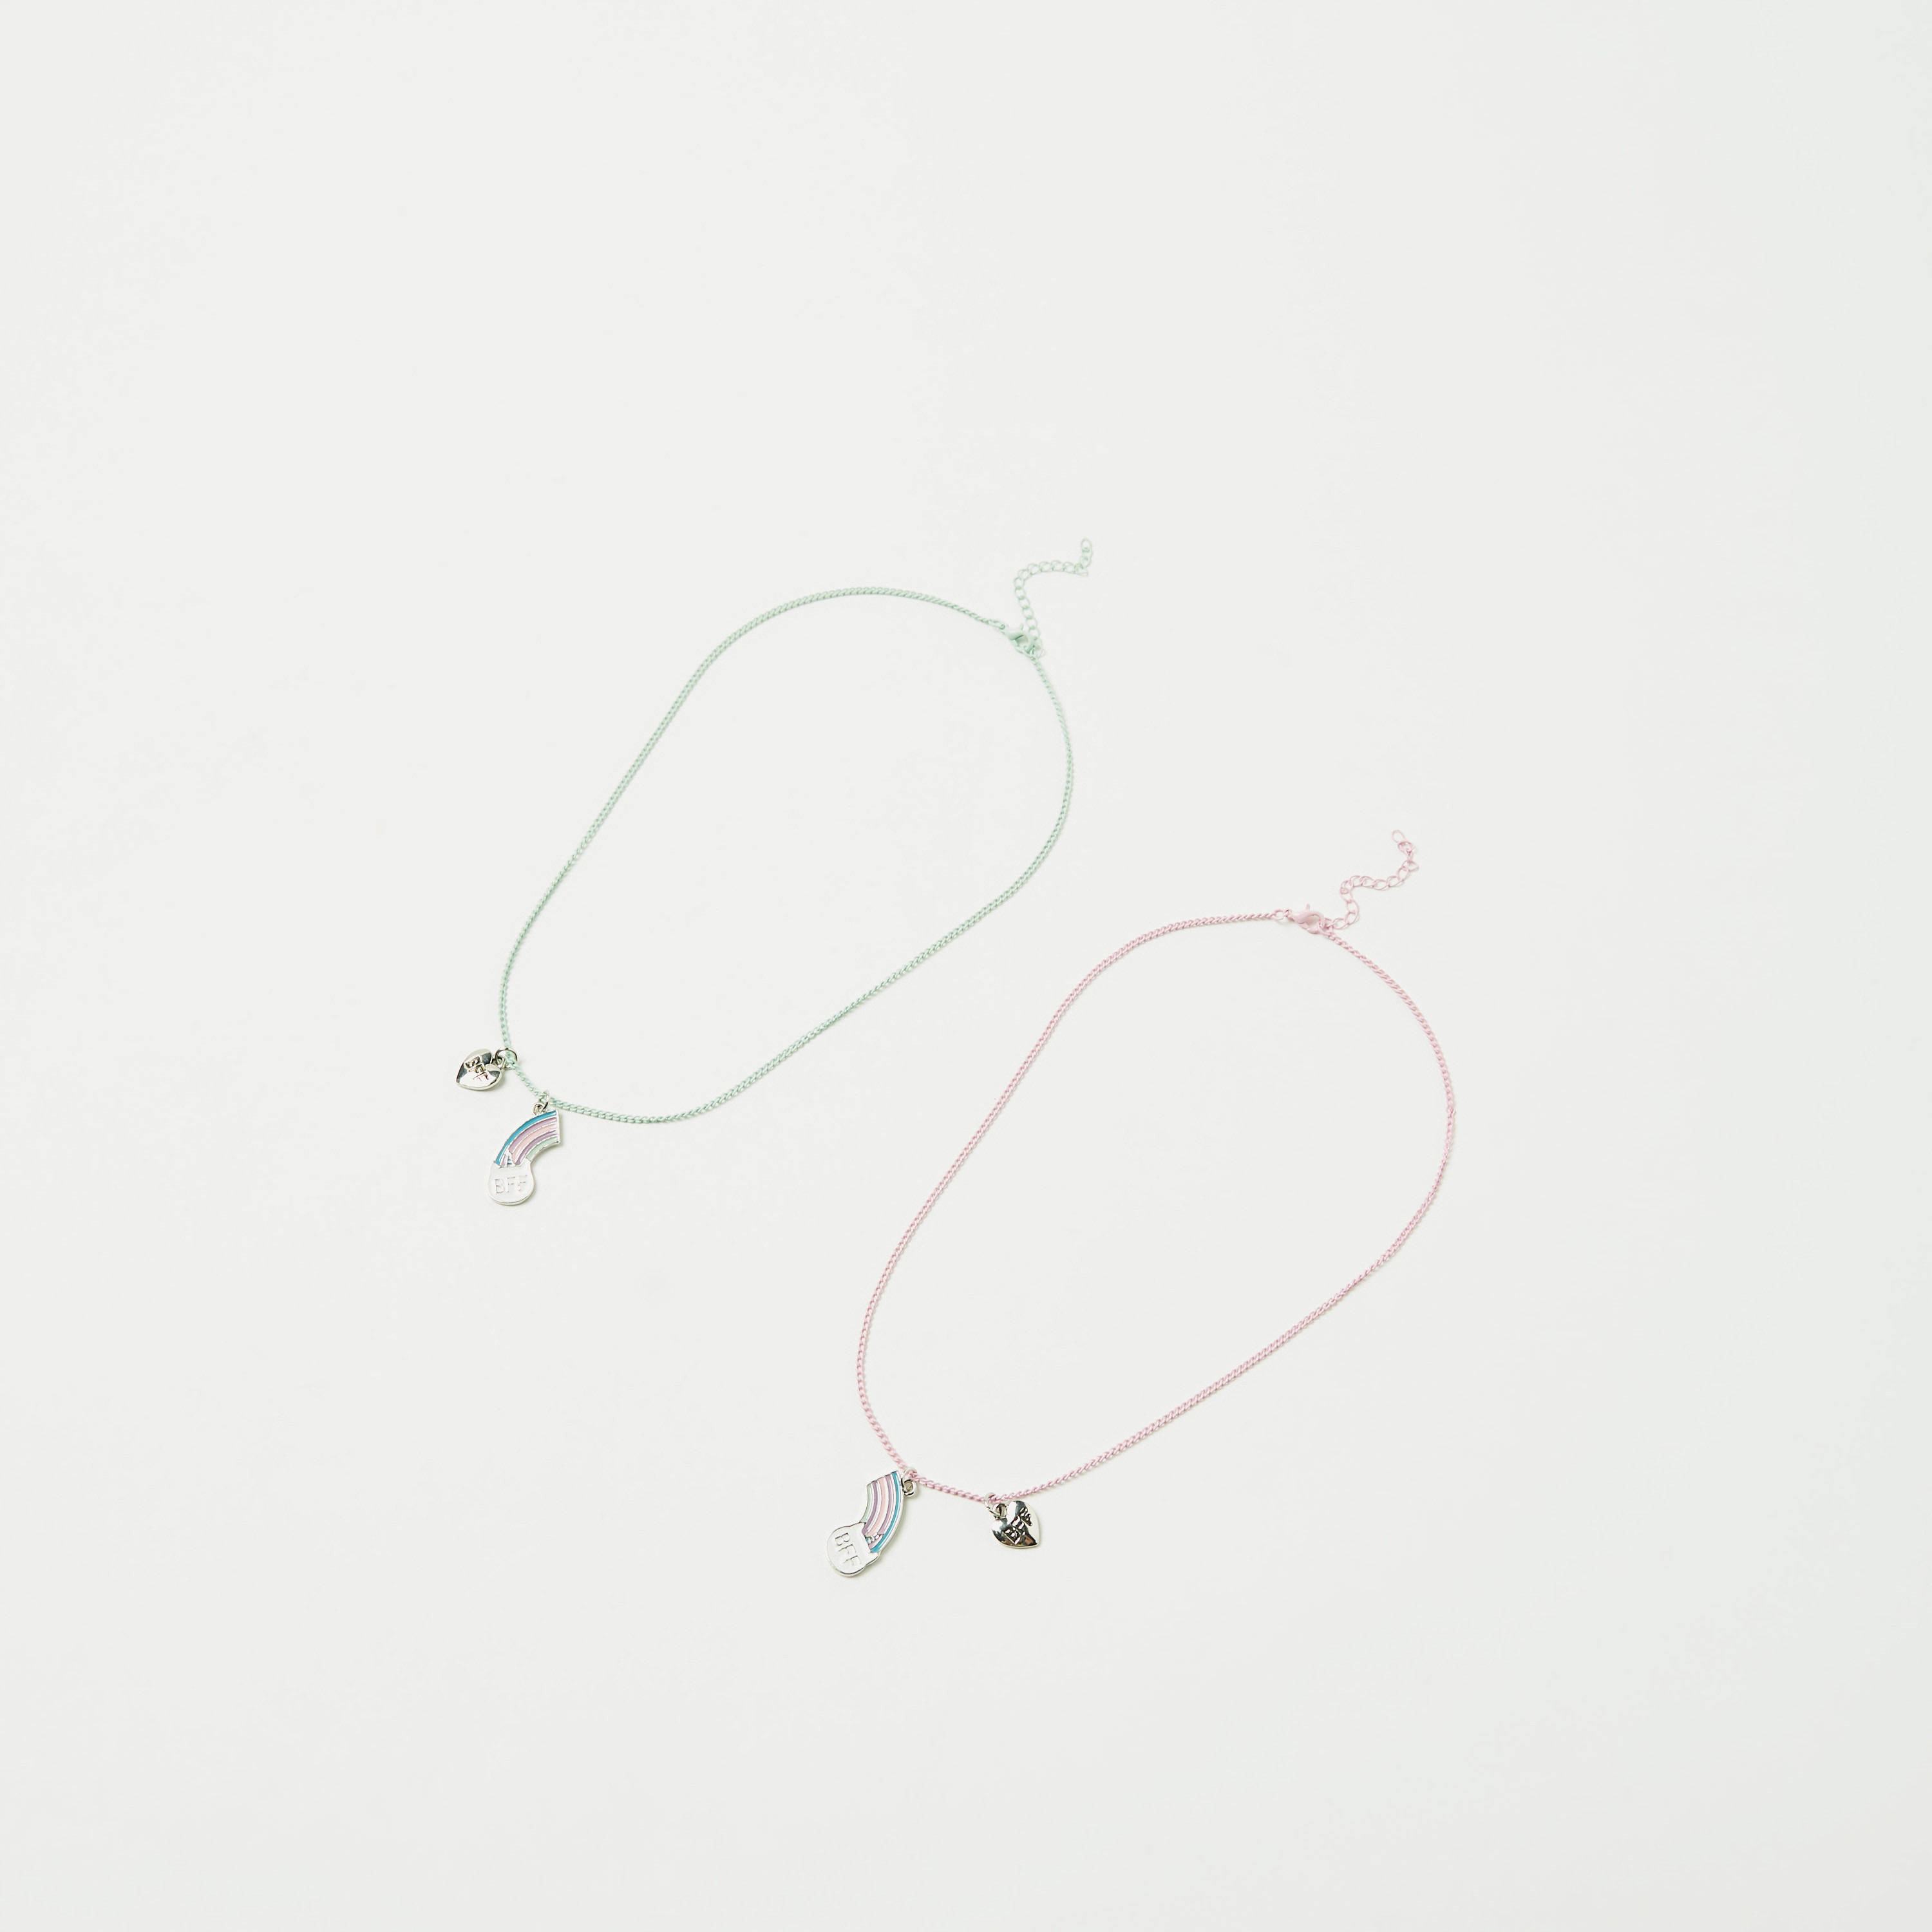 2 Pcs Magnet Heart Best Friend Lover Couple Stick Man Friendship Necklace  Gift | eBay